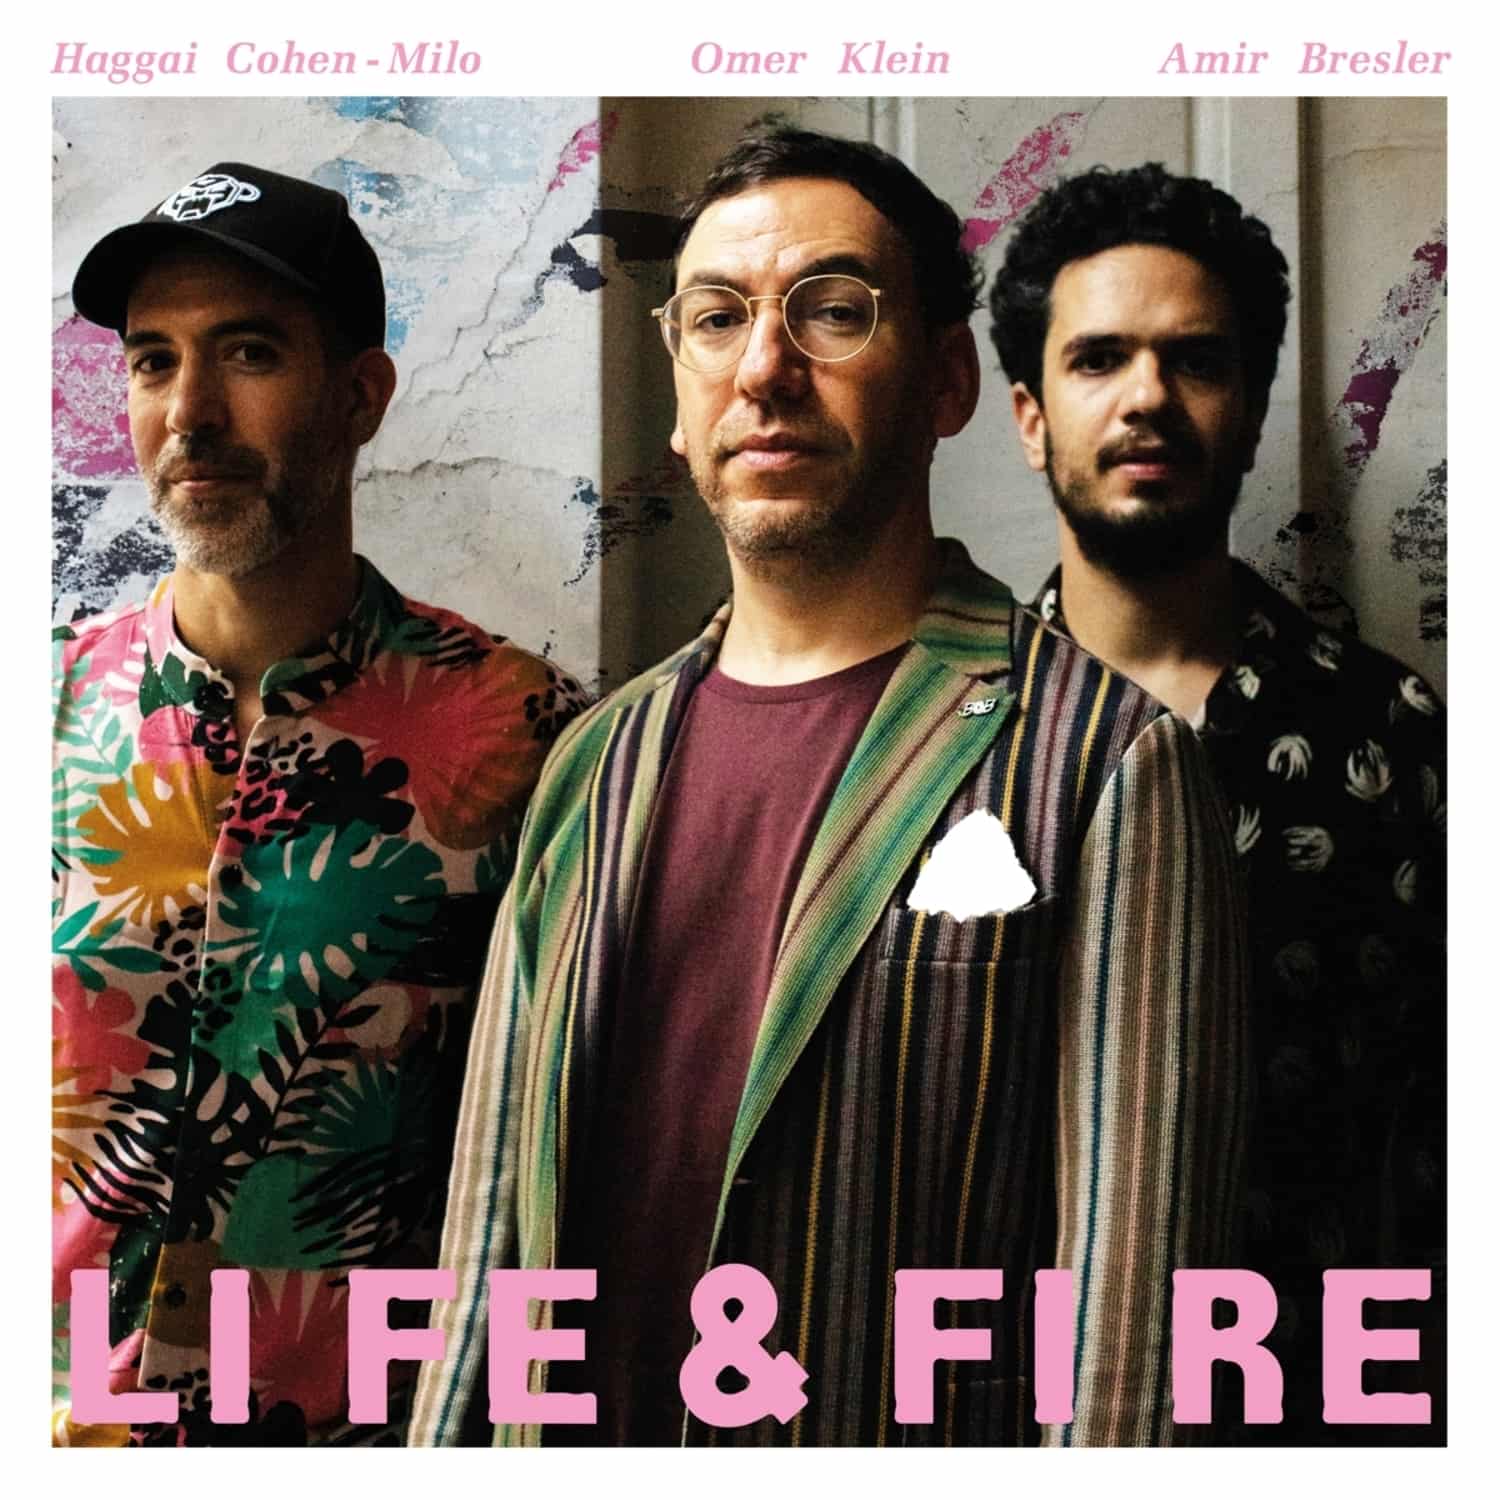 Omer Klein / Haggai Cohen-Milo / Amir Bresler - LIFE & FIRE 